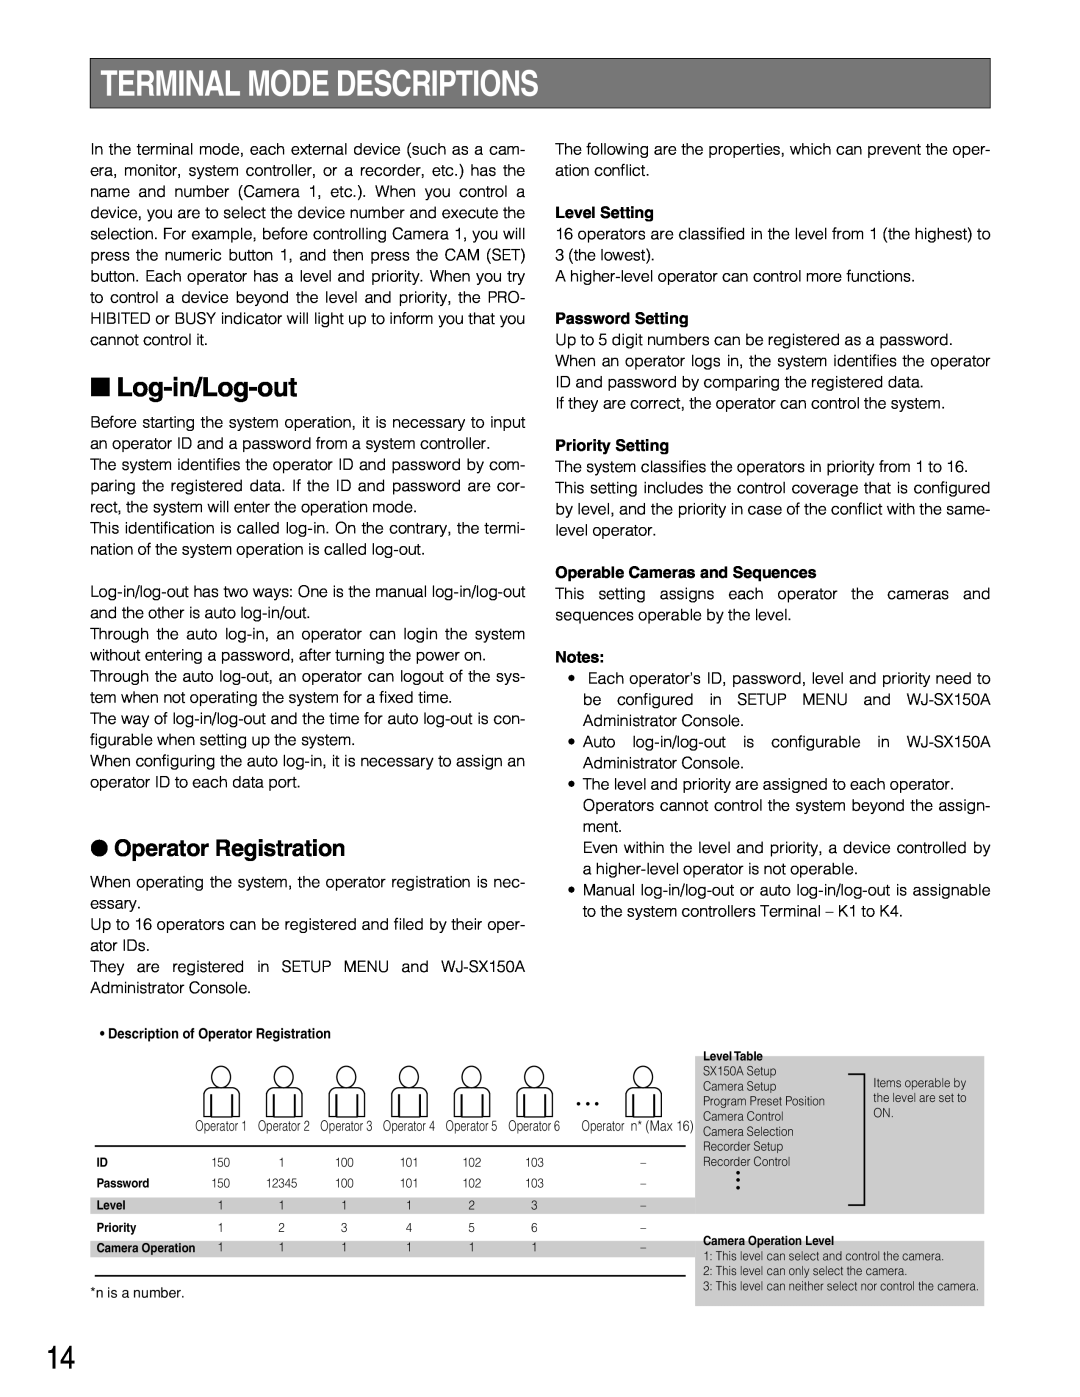 Panasonic WJ-SX150A Terminal Mode Descriptions, Log-in/Log-out, Operator Registration, Level Setting, Password Setting 